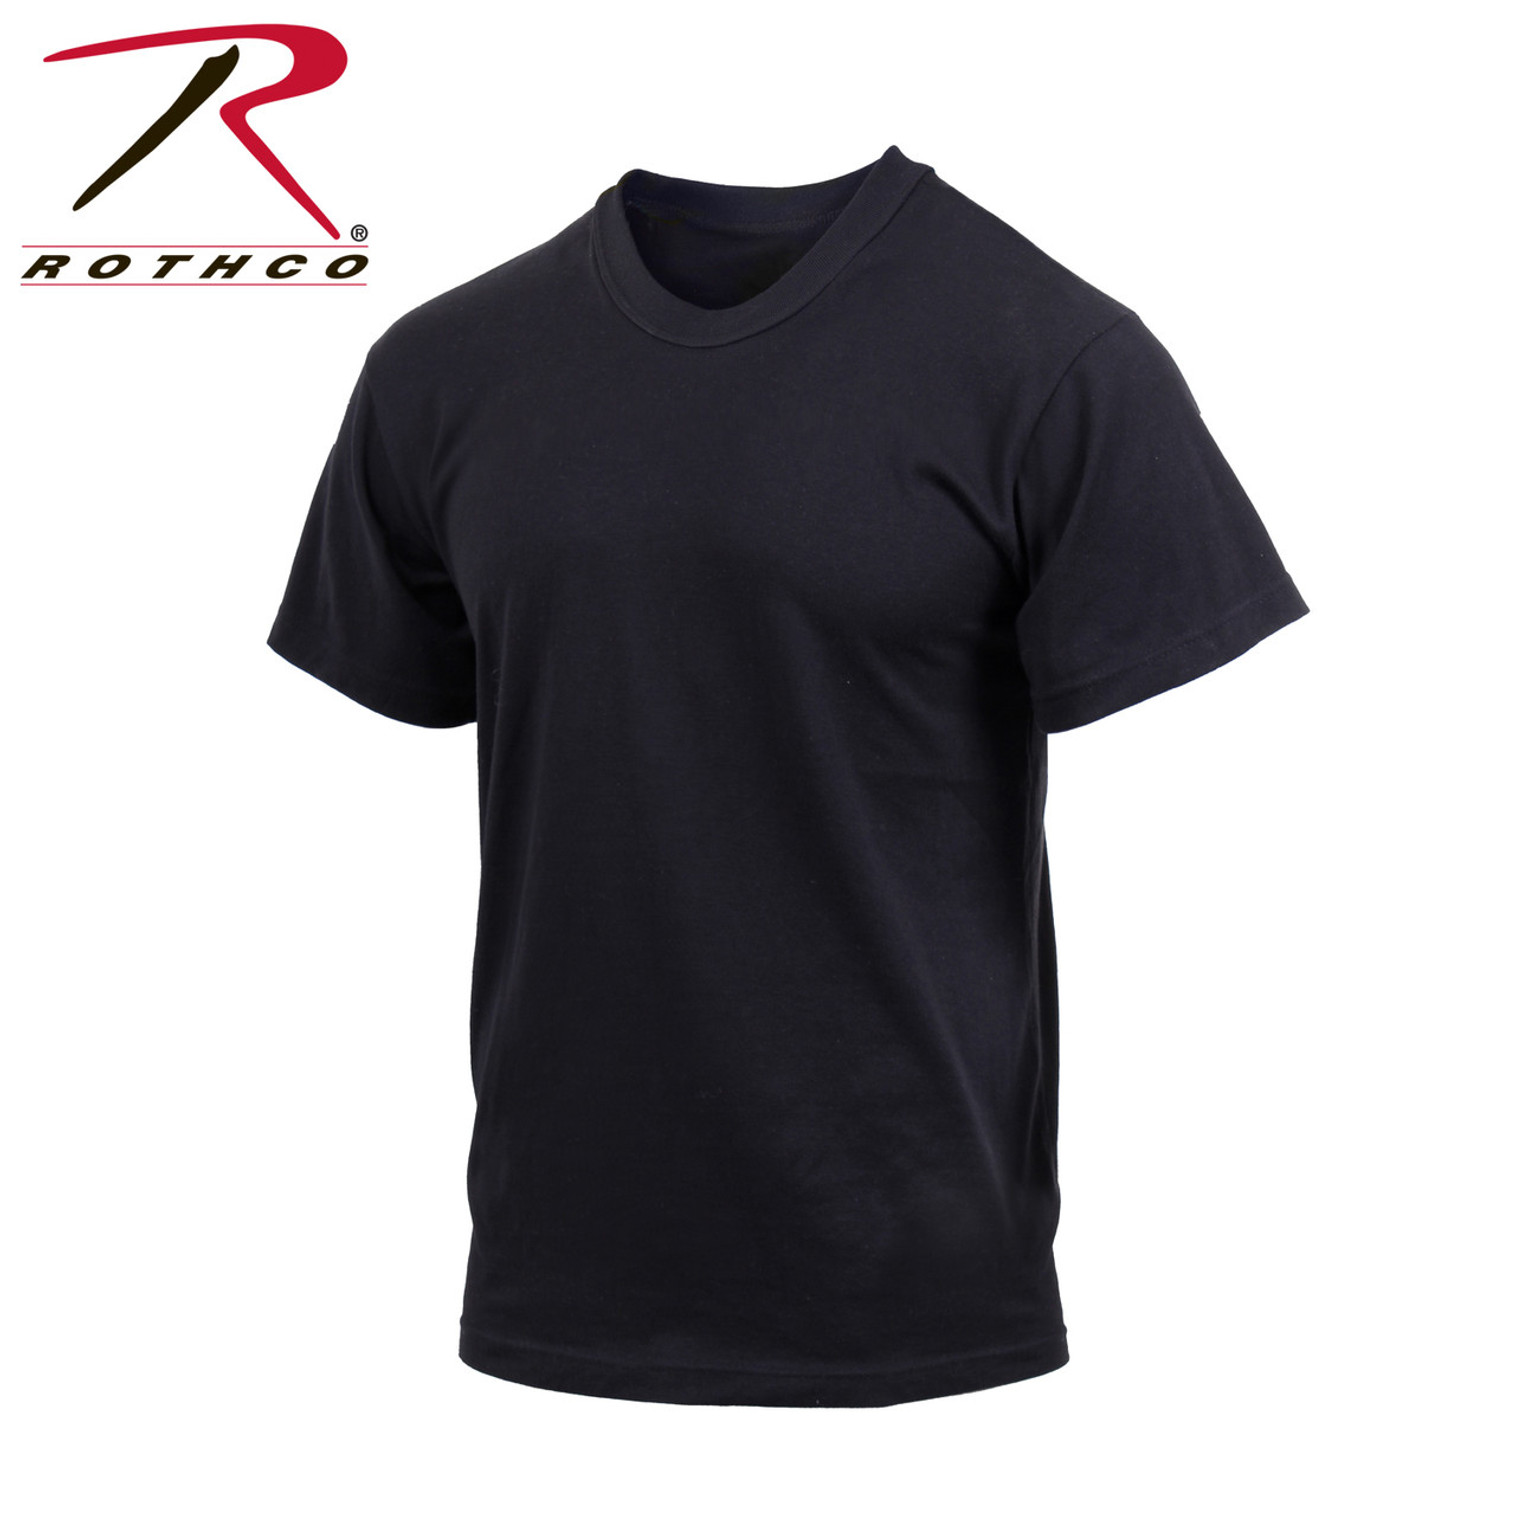 Rothco Moisture Wicking T-Shirts - Black